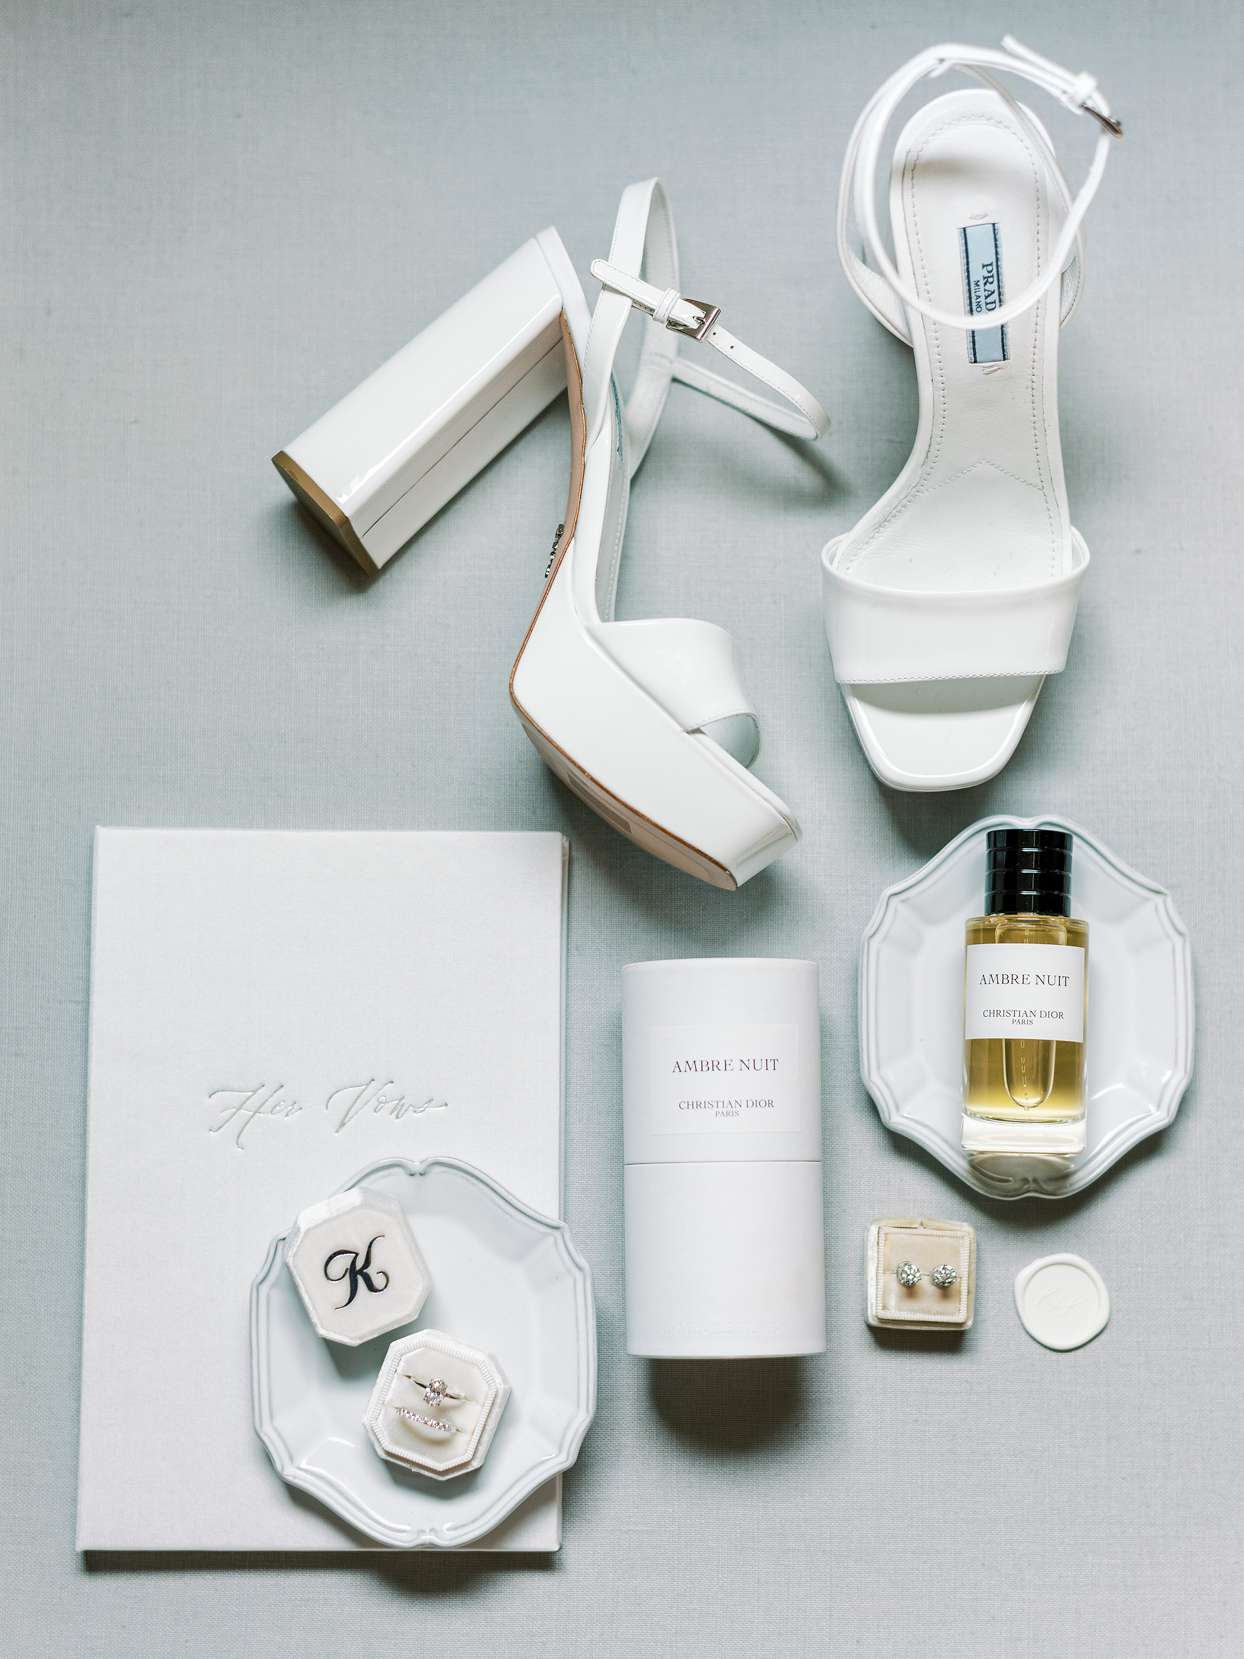 bride's elegant white wedding accessories and perfume